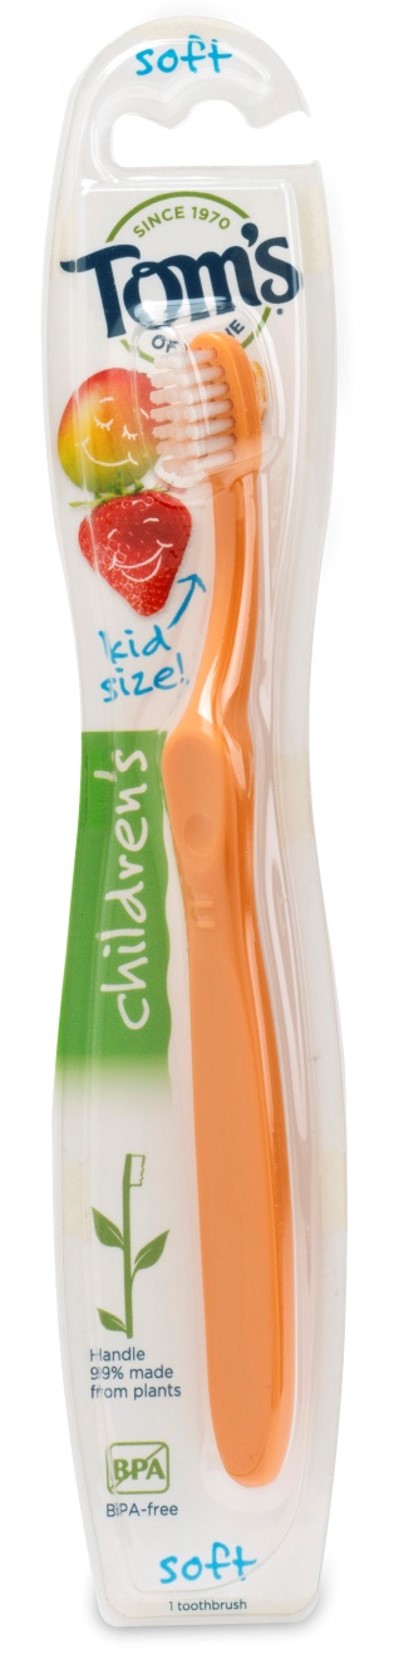 Extra Soft Children's Toothbrush